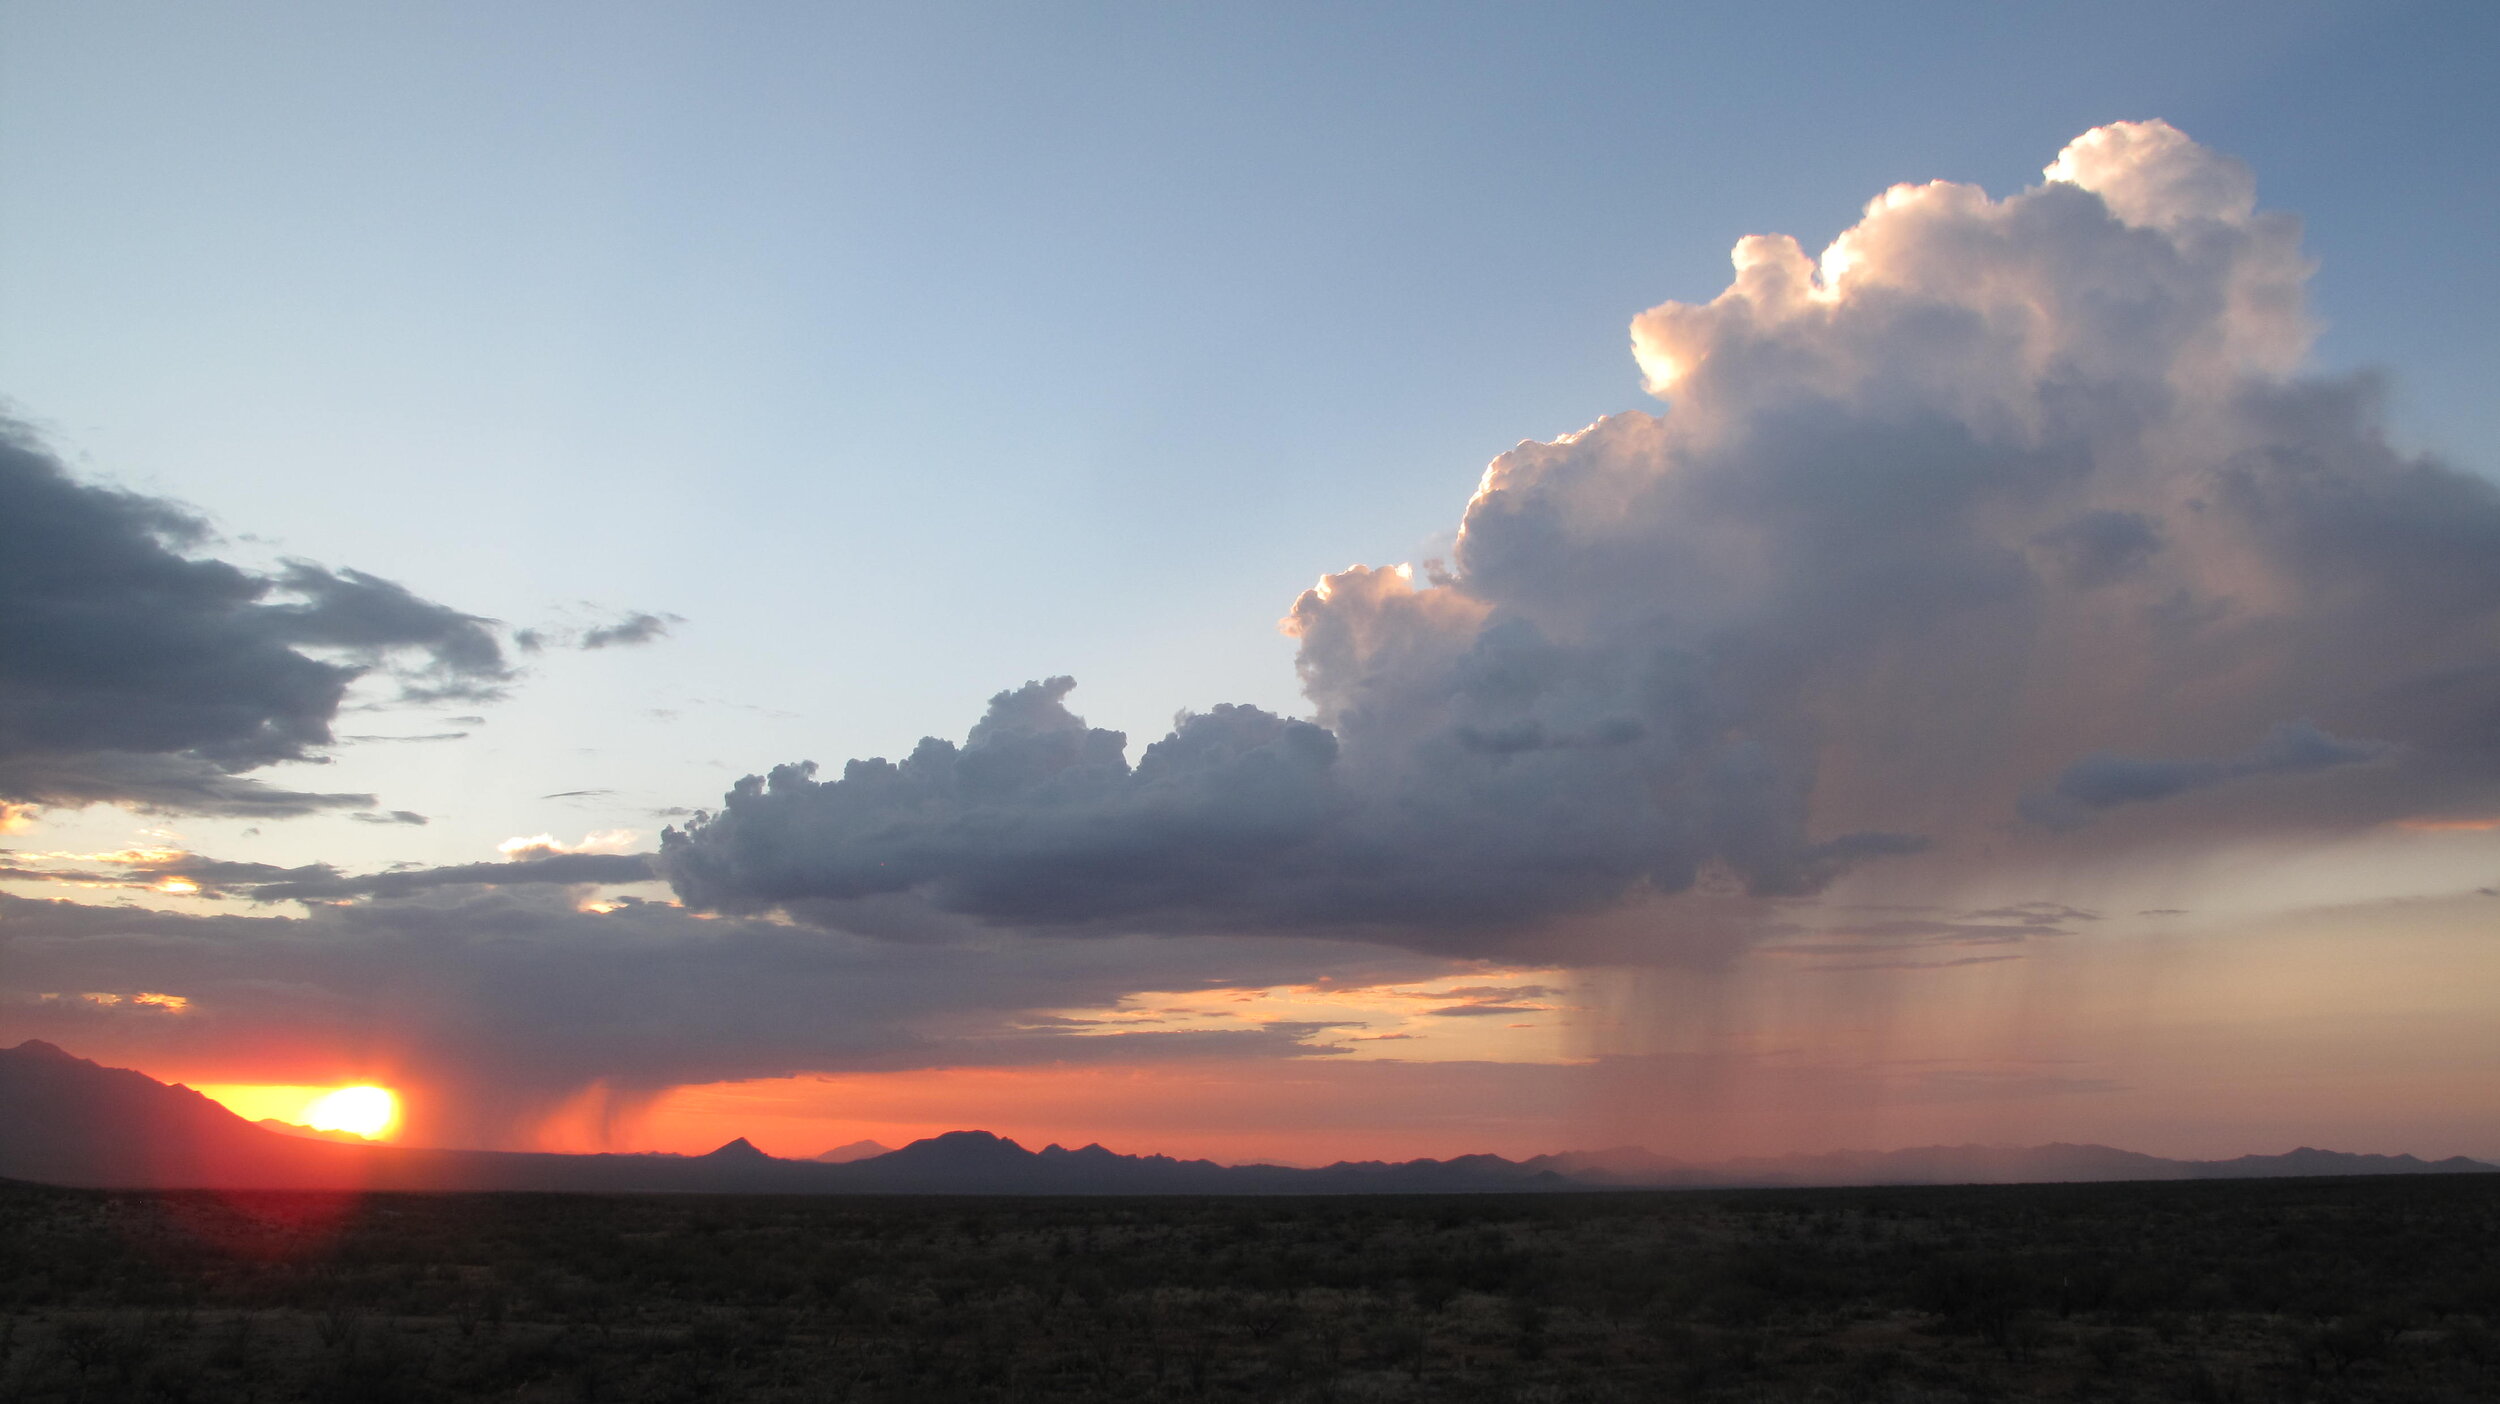  Cumulonimbus, Ravenrock, Southern Arizona, USA, by Roseann Hanson 